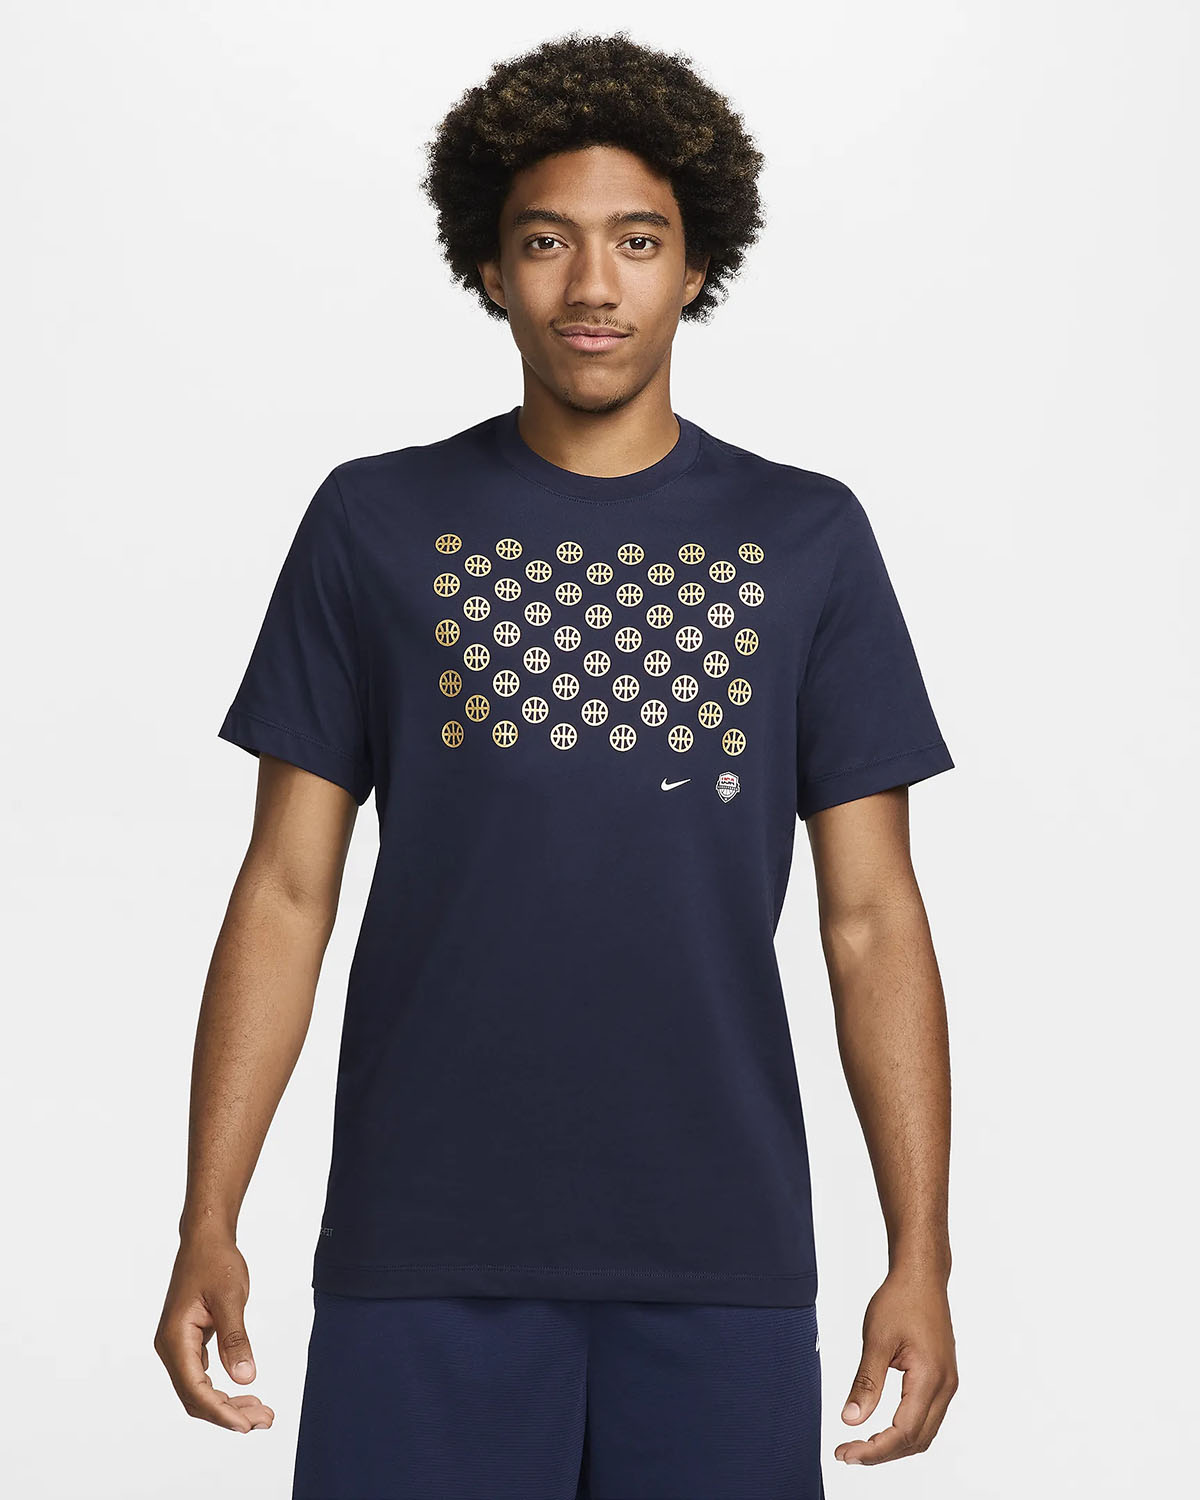 Nike USA Basketball T Shirt Obsidian Gold 1